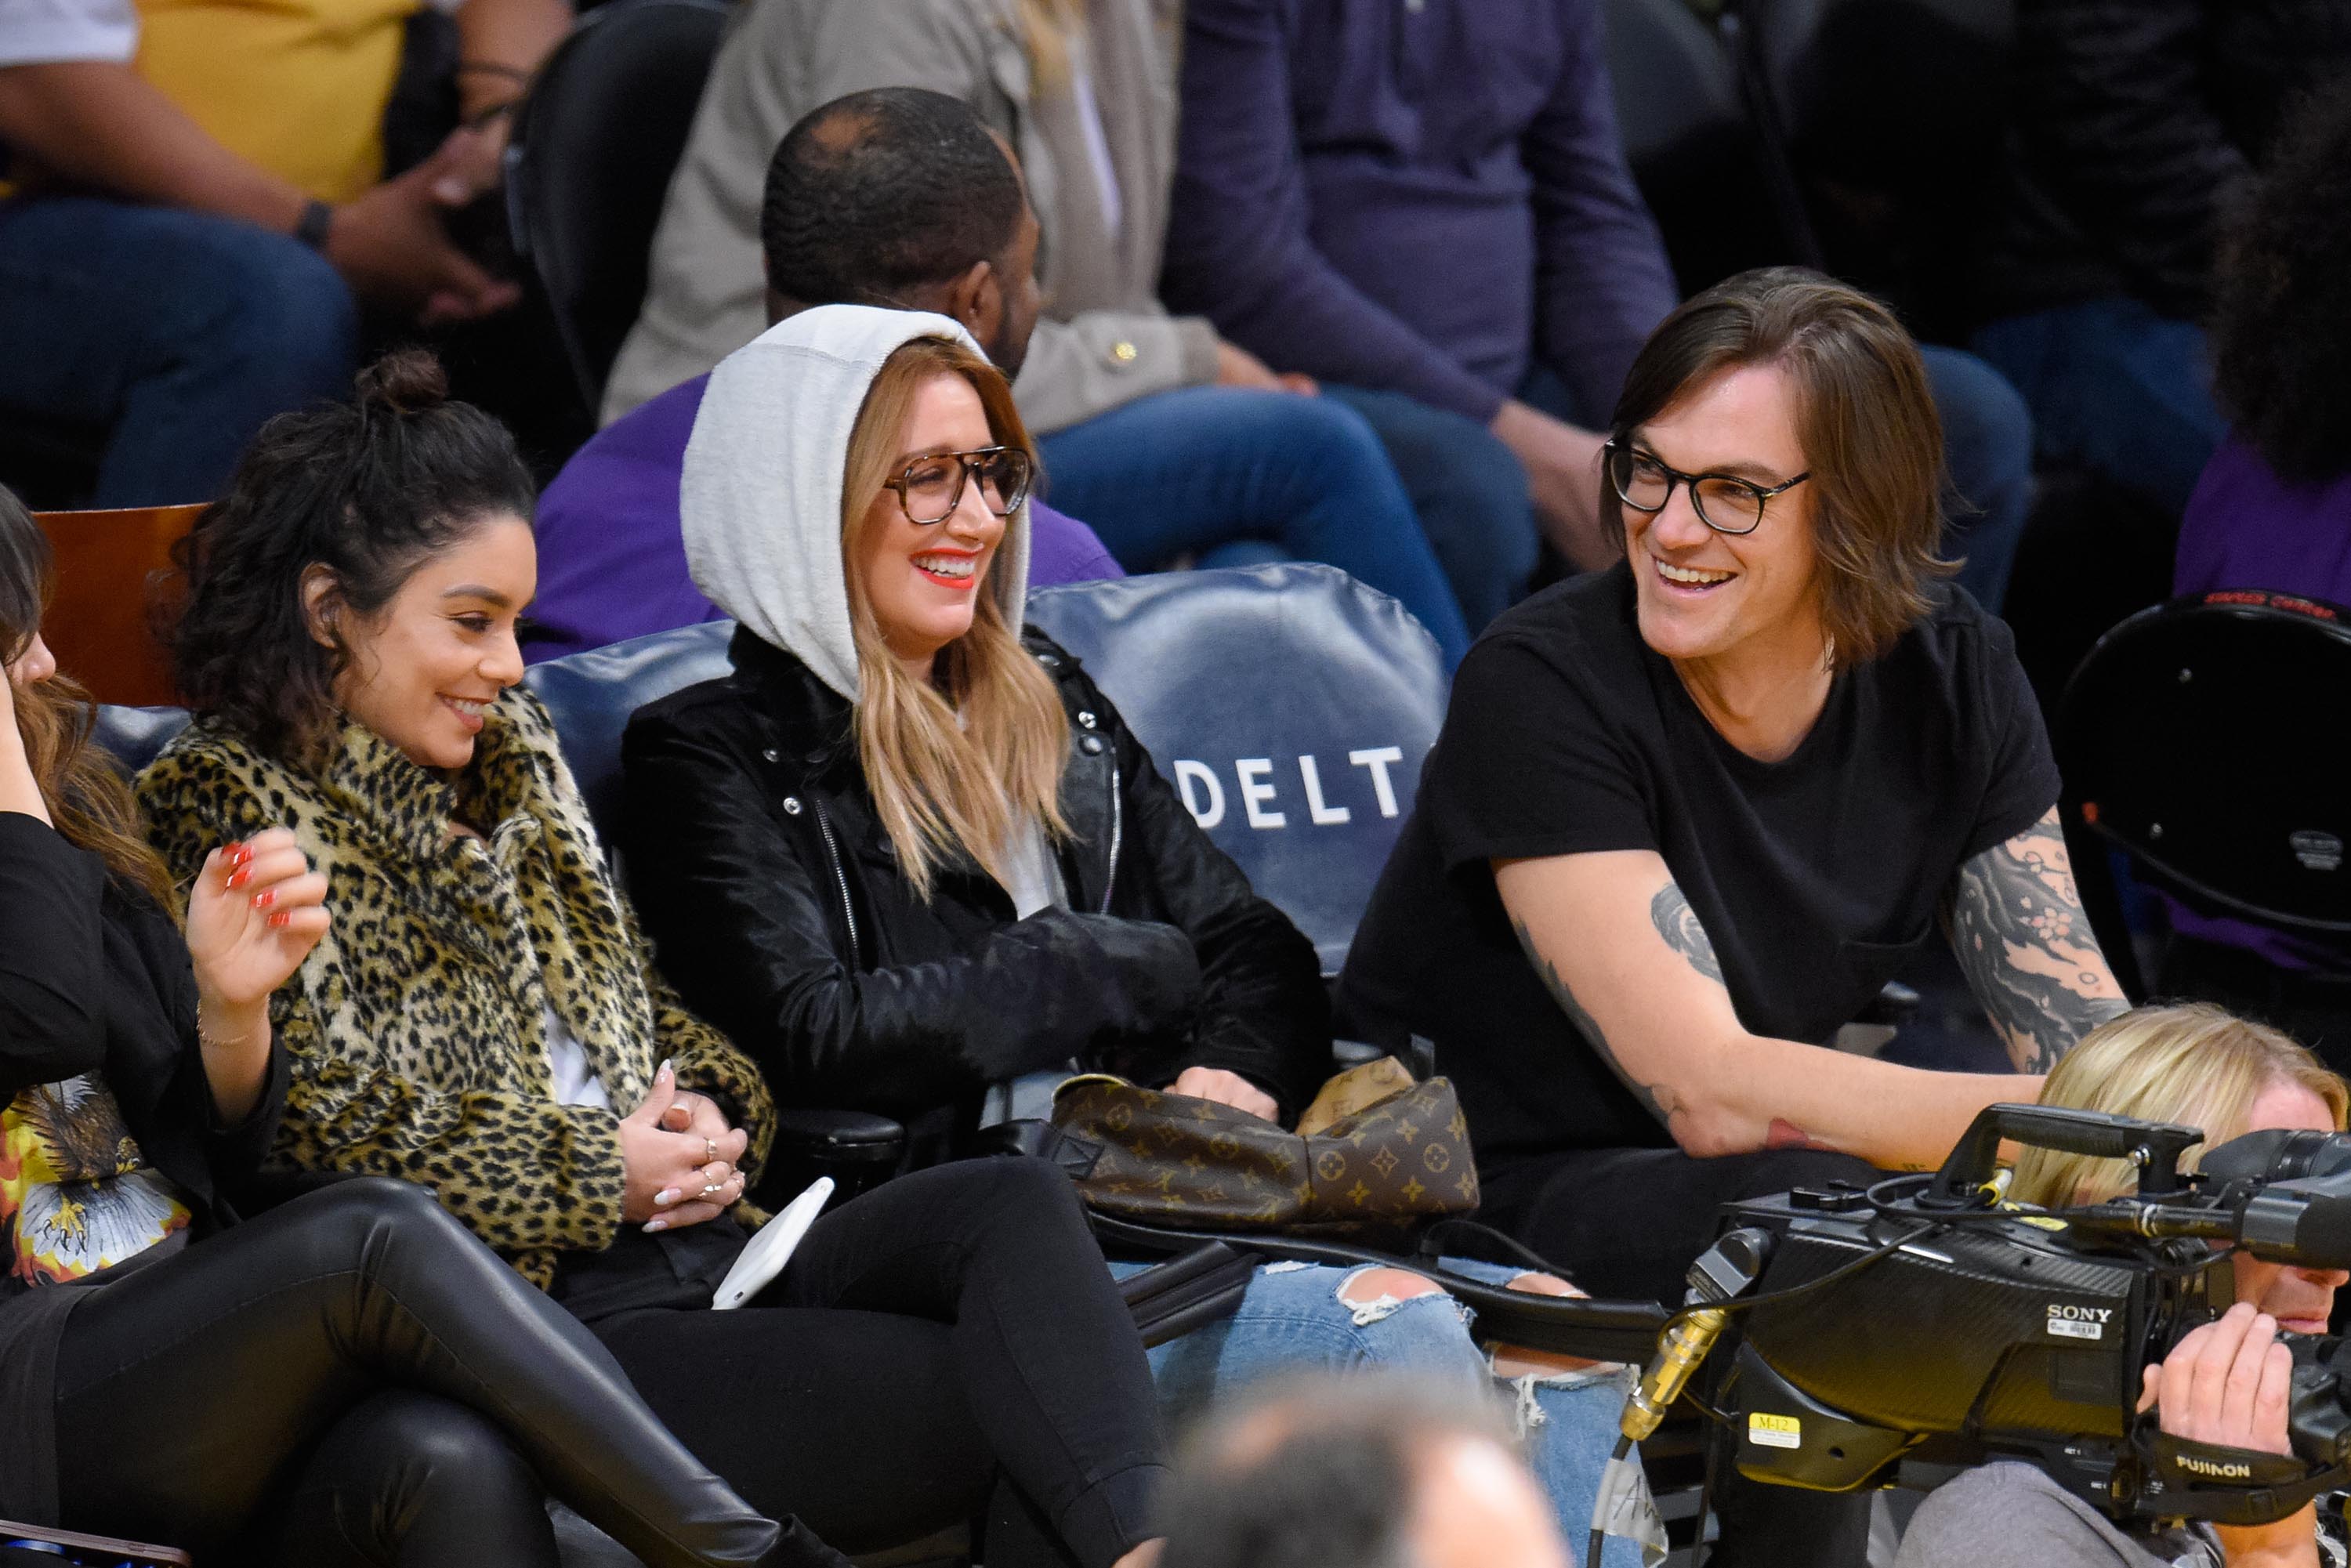 Stella Hudgens attends a basketball game